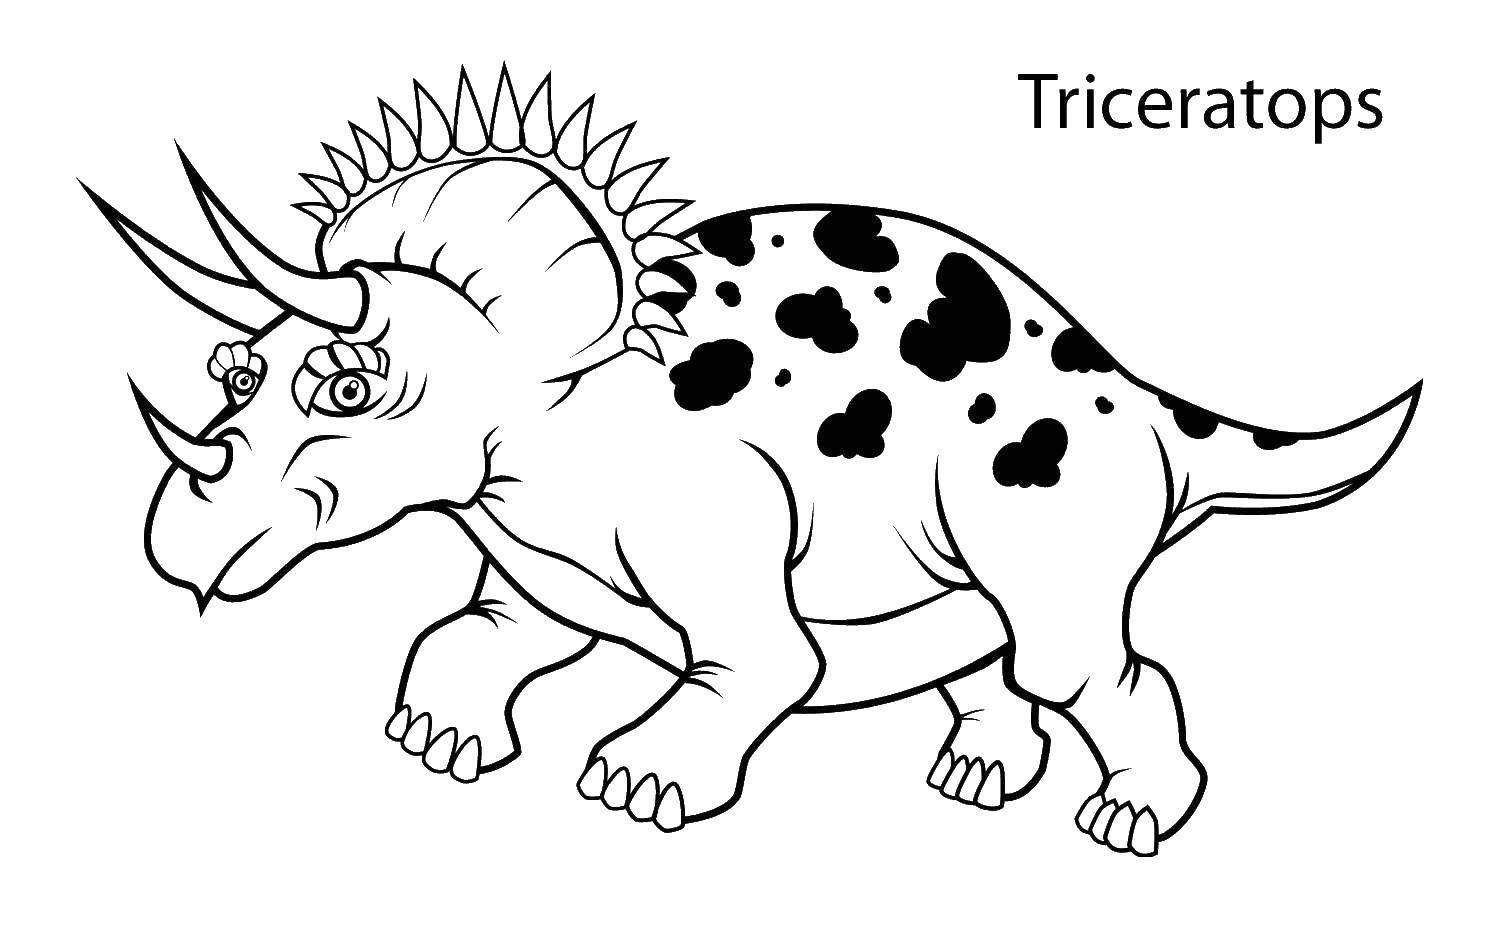 Coloring Dinosaur Triceratops.. Category dinosaur. Tags:  dinosaurs, Triceratops.